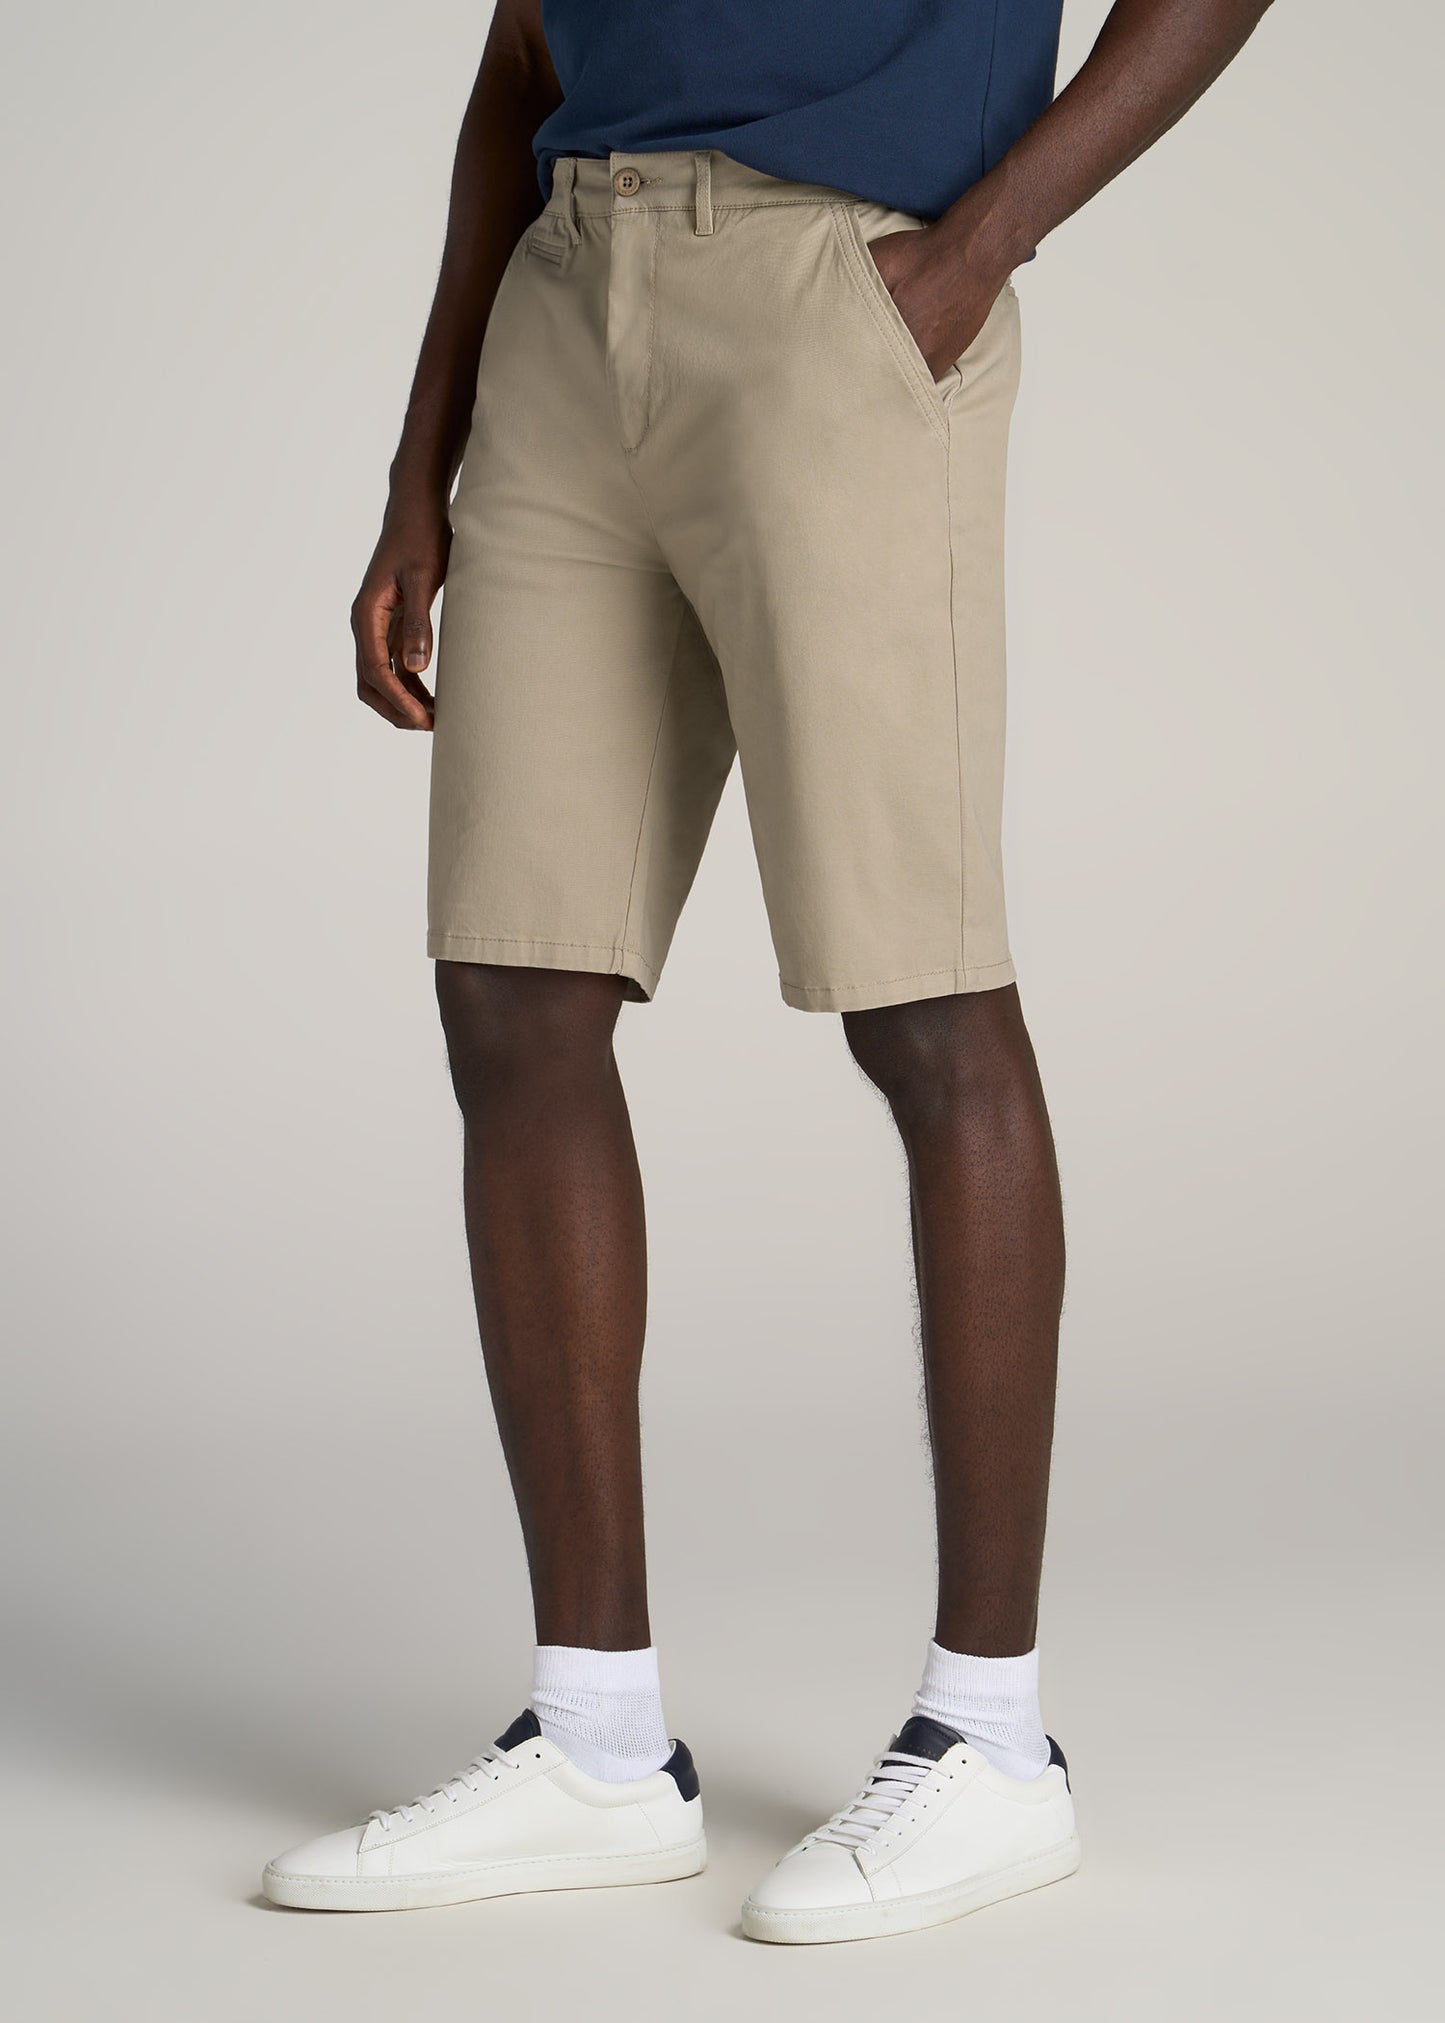       American-Tall-Men-Chino-Shorts-Desert-Khaki-side